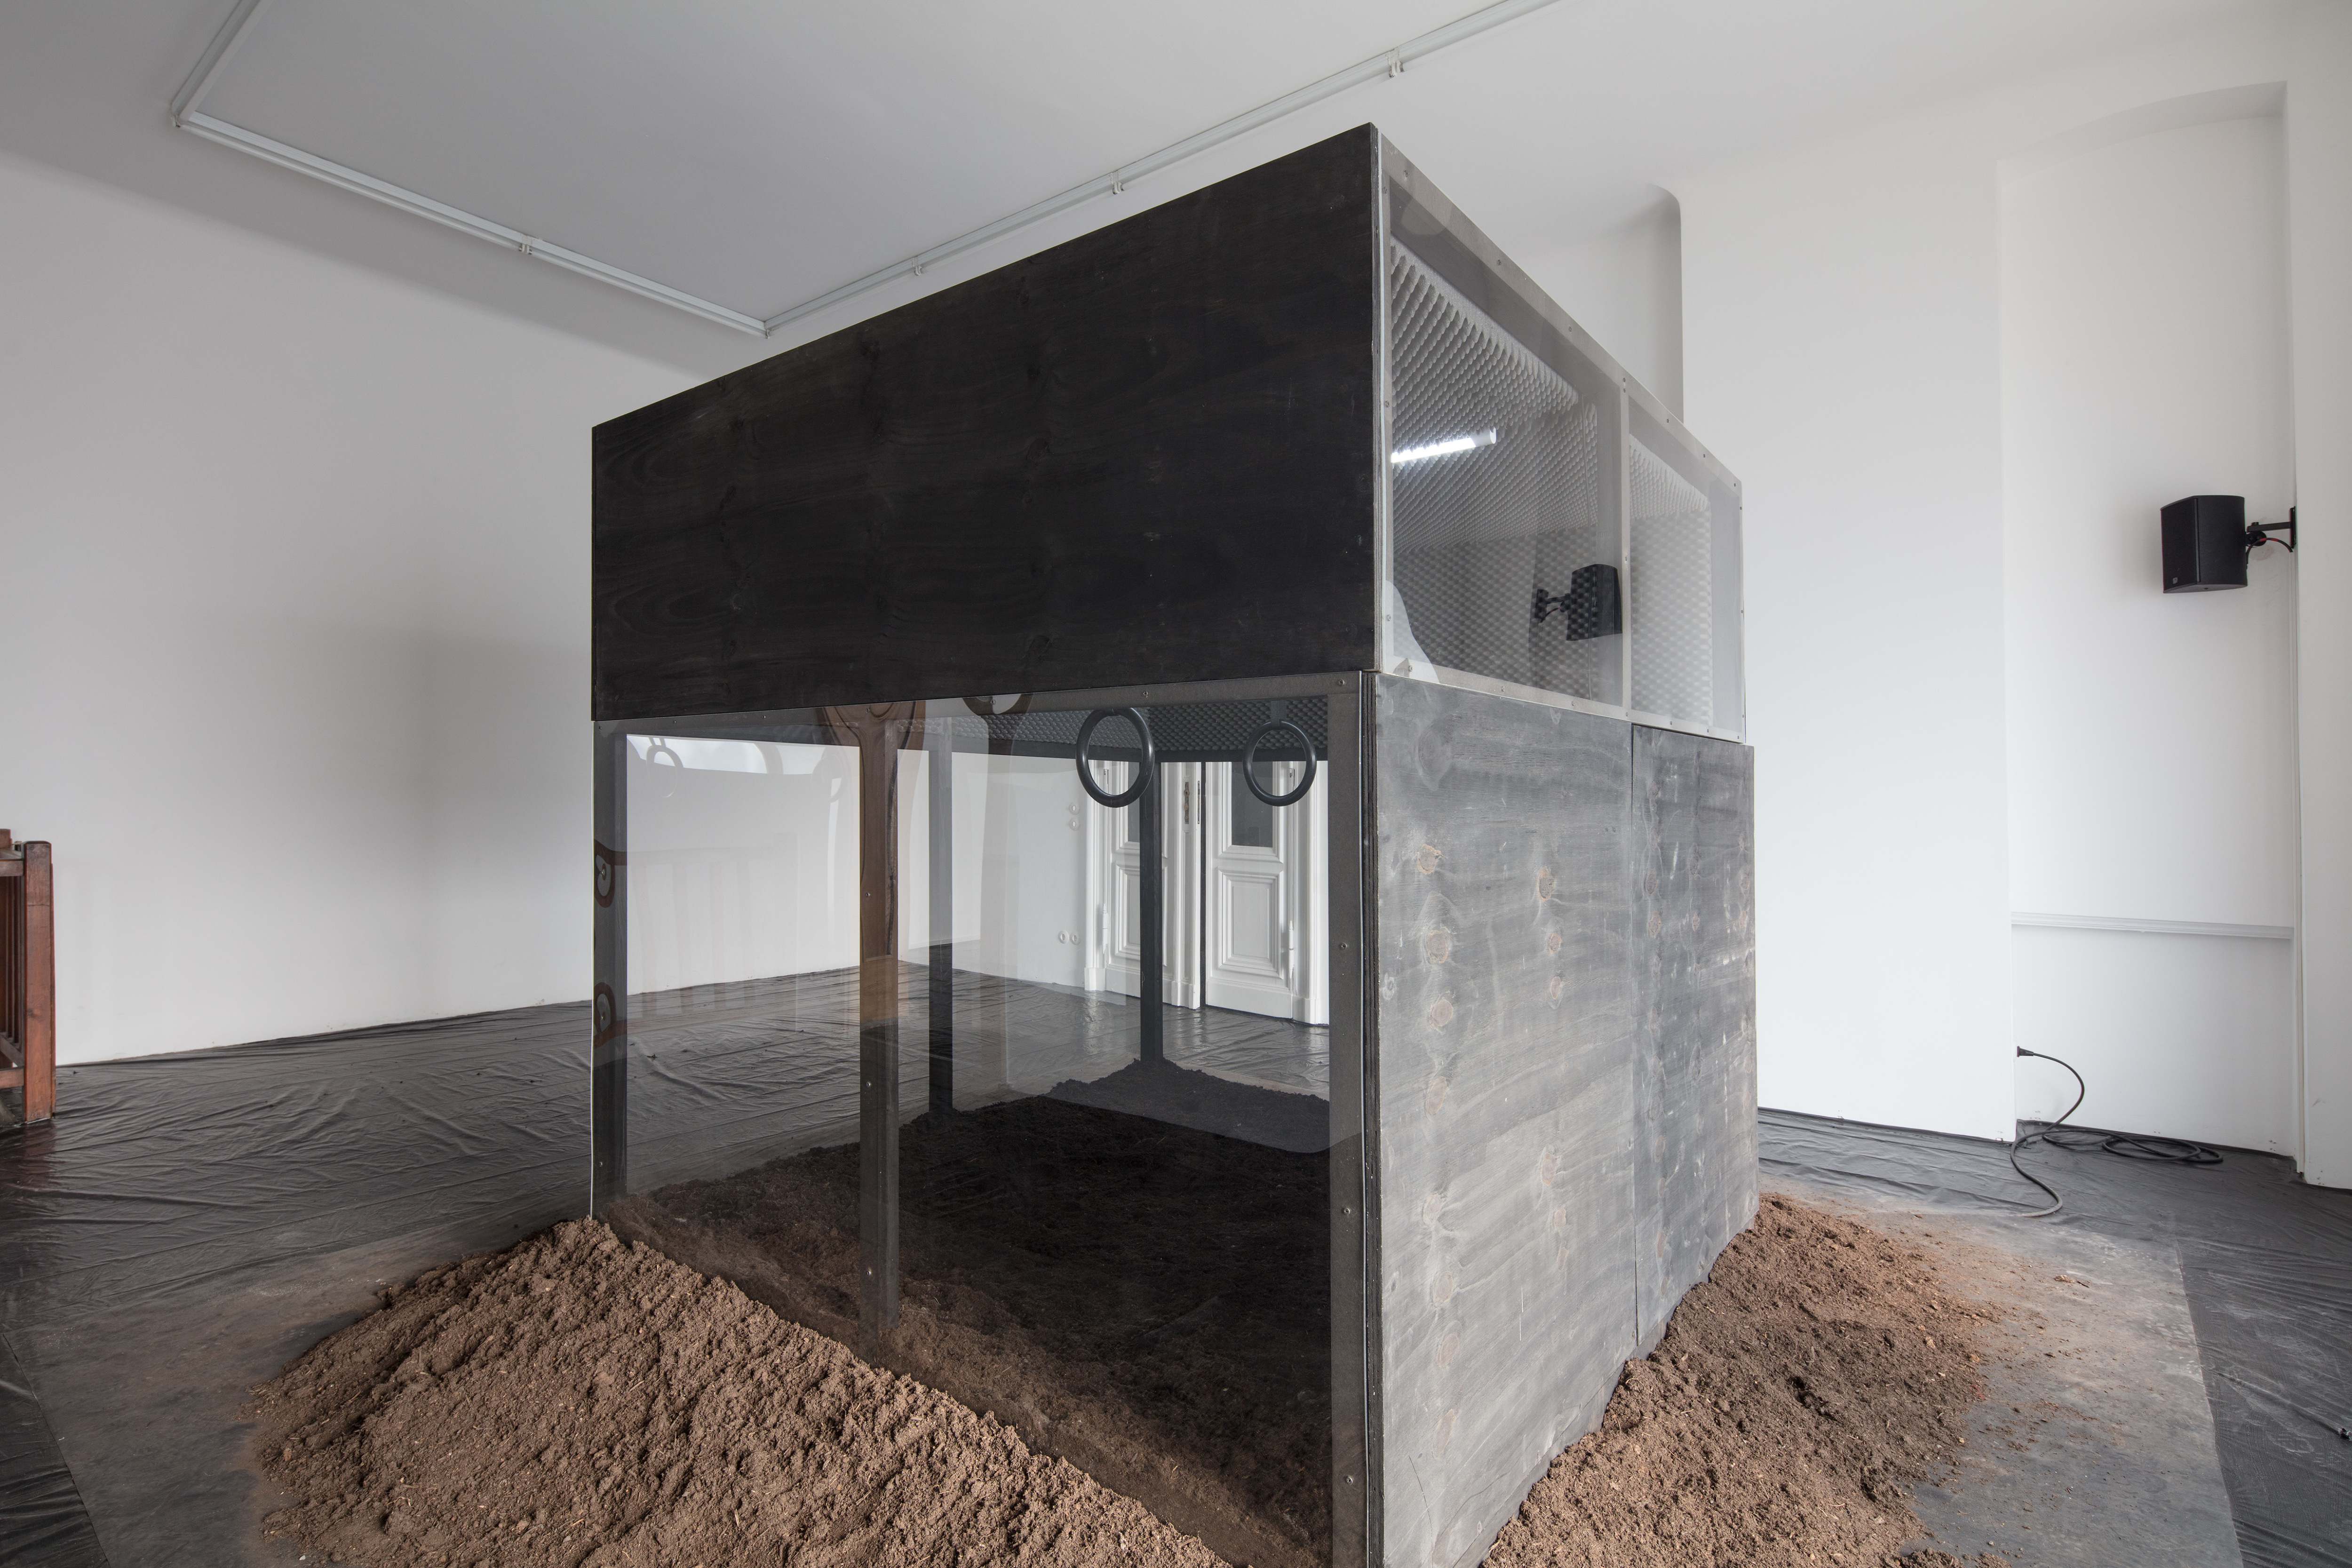 In Service Of A Song, installation view, Galerie Isabella Bortolozzi, Berlin, 2018